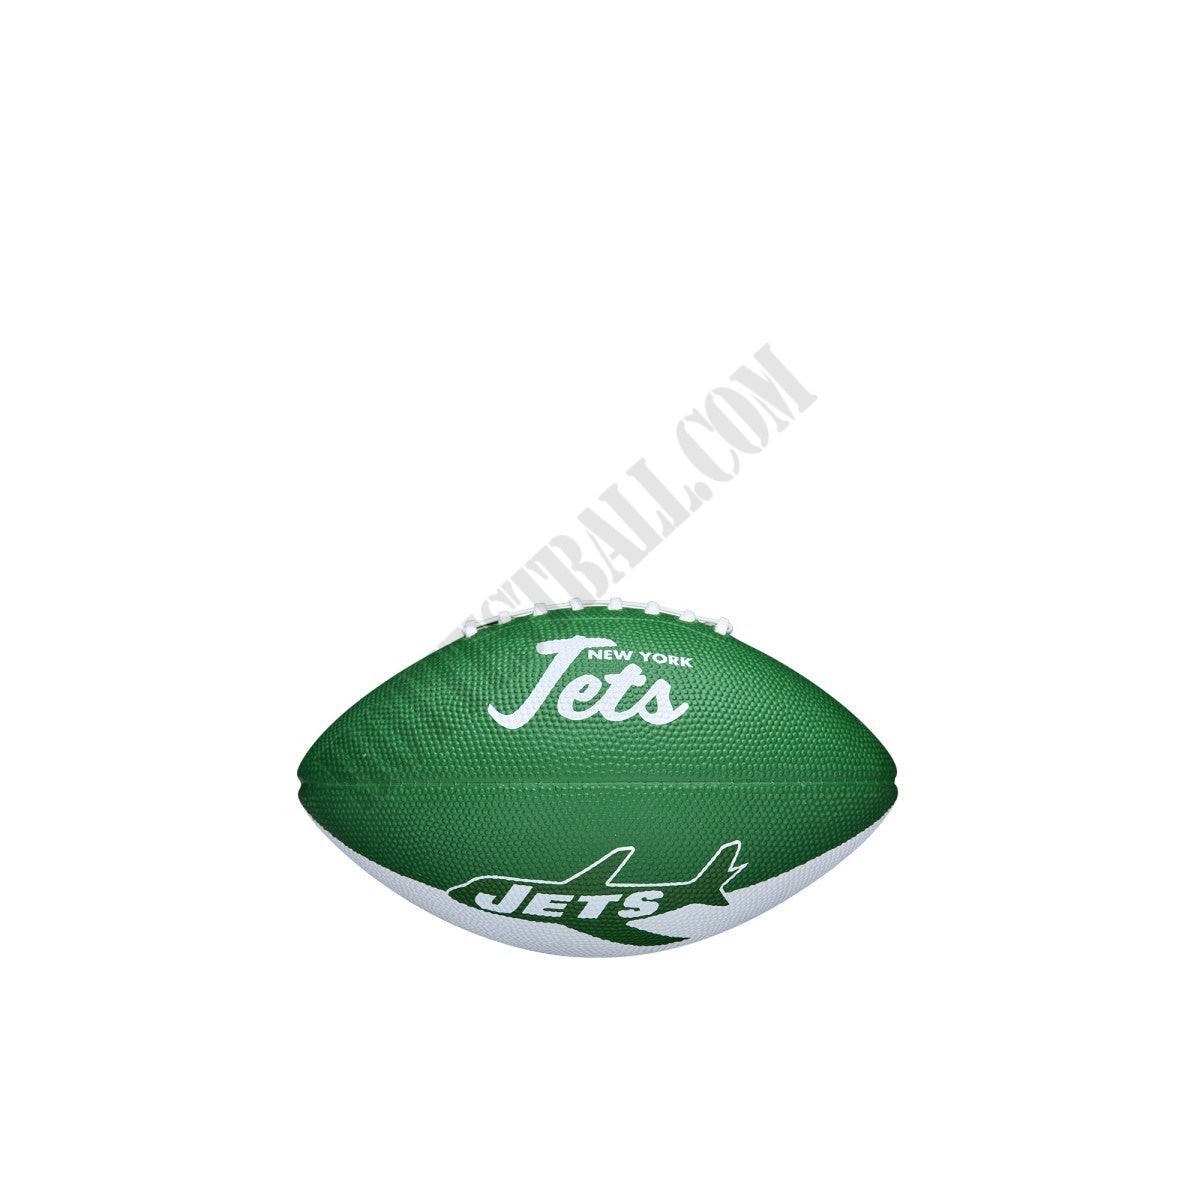 NFL Retro Mini Football - New York Jets ● Wilson Promotions - NFL Retro Mini Football - New York Jets ● Wilson Promotions